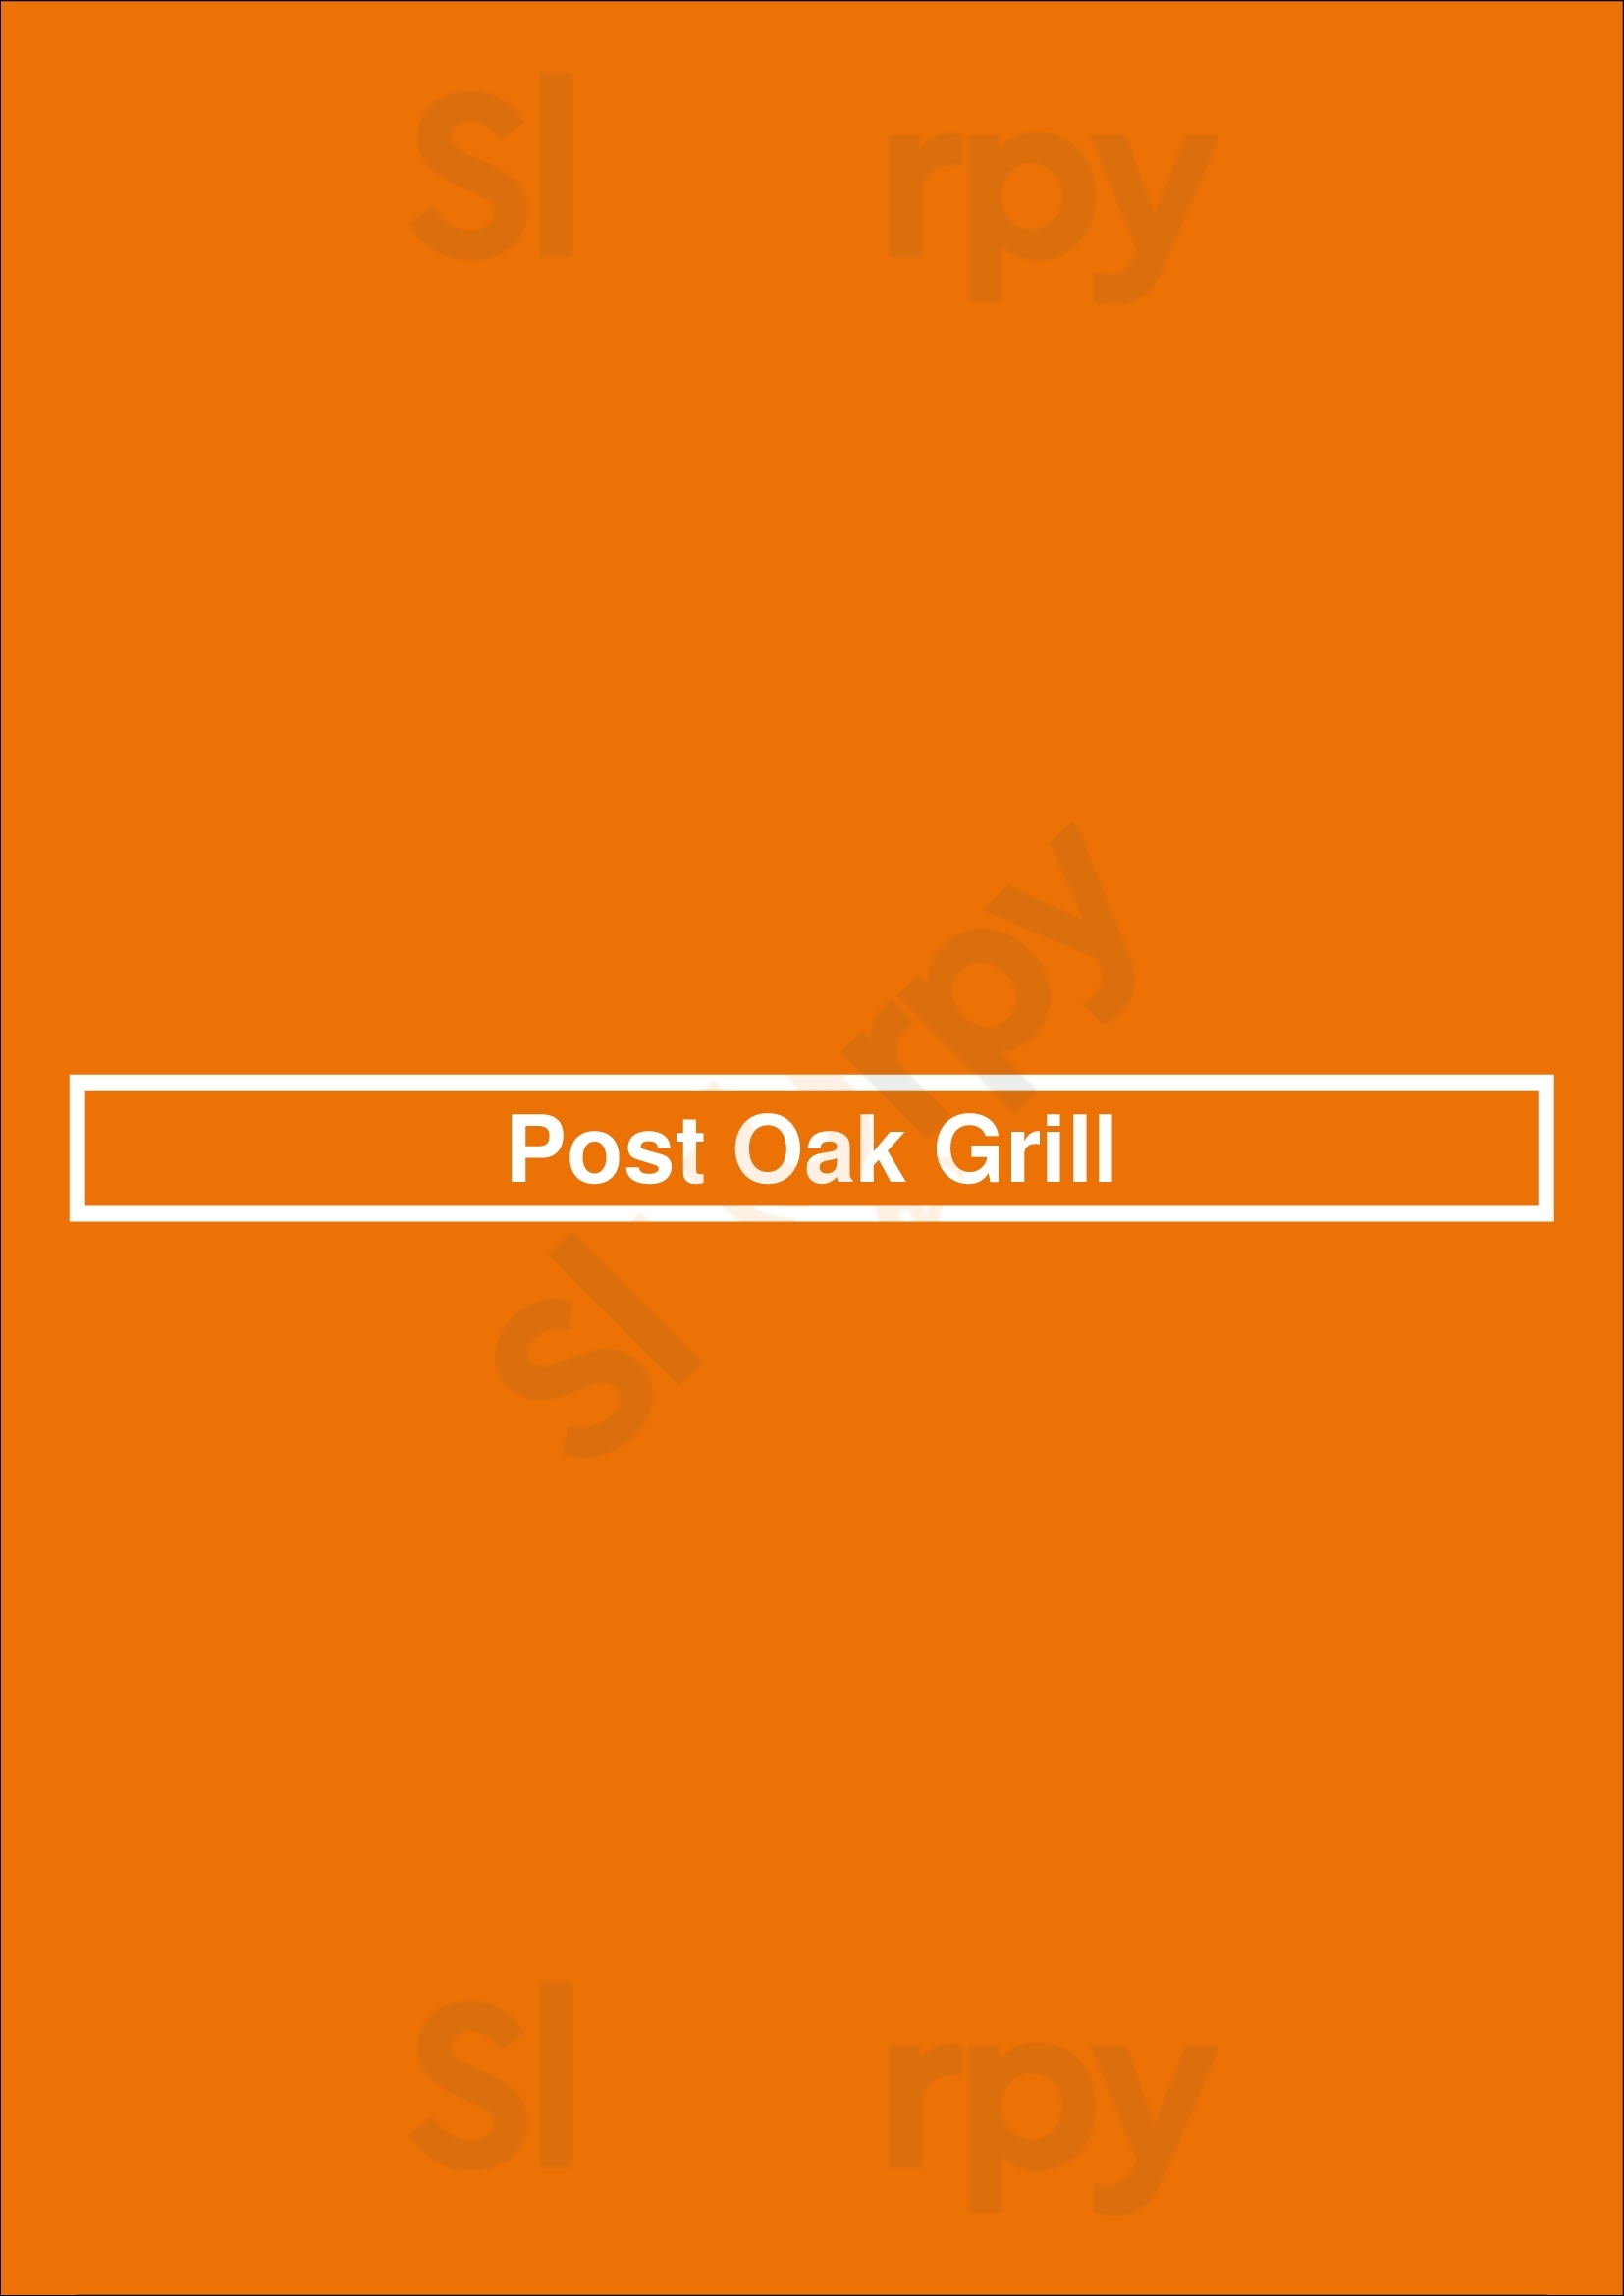 Post Oak Grill Houston Menu - 1